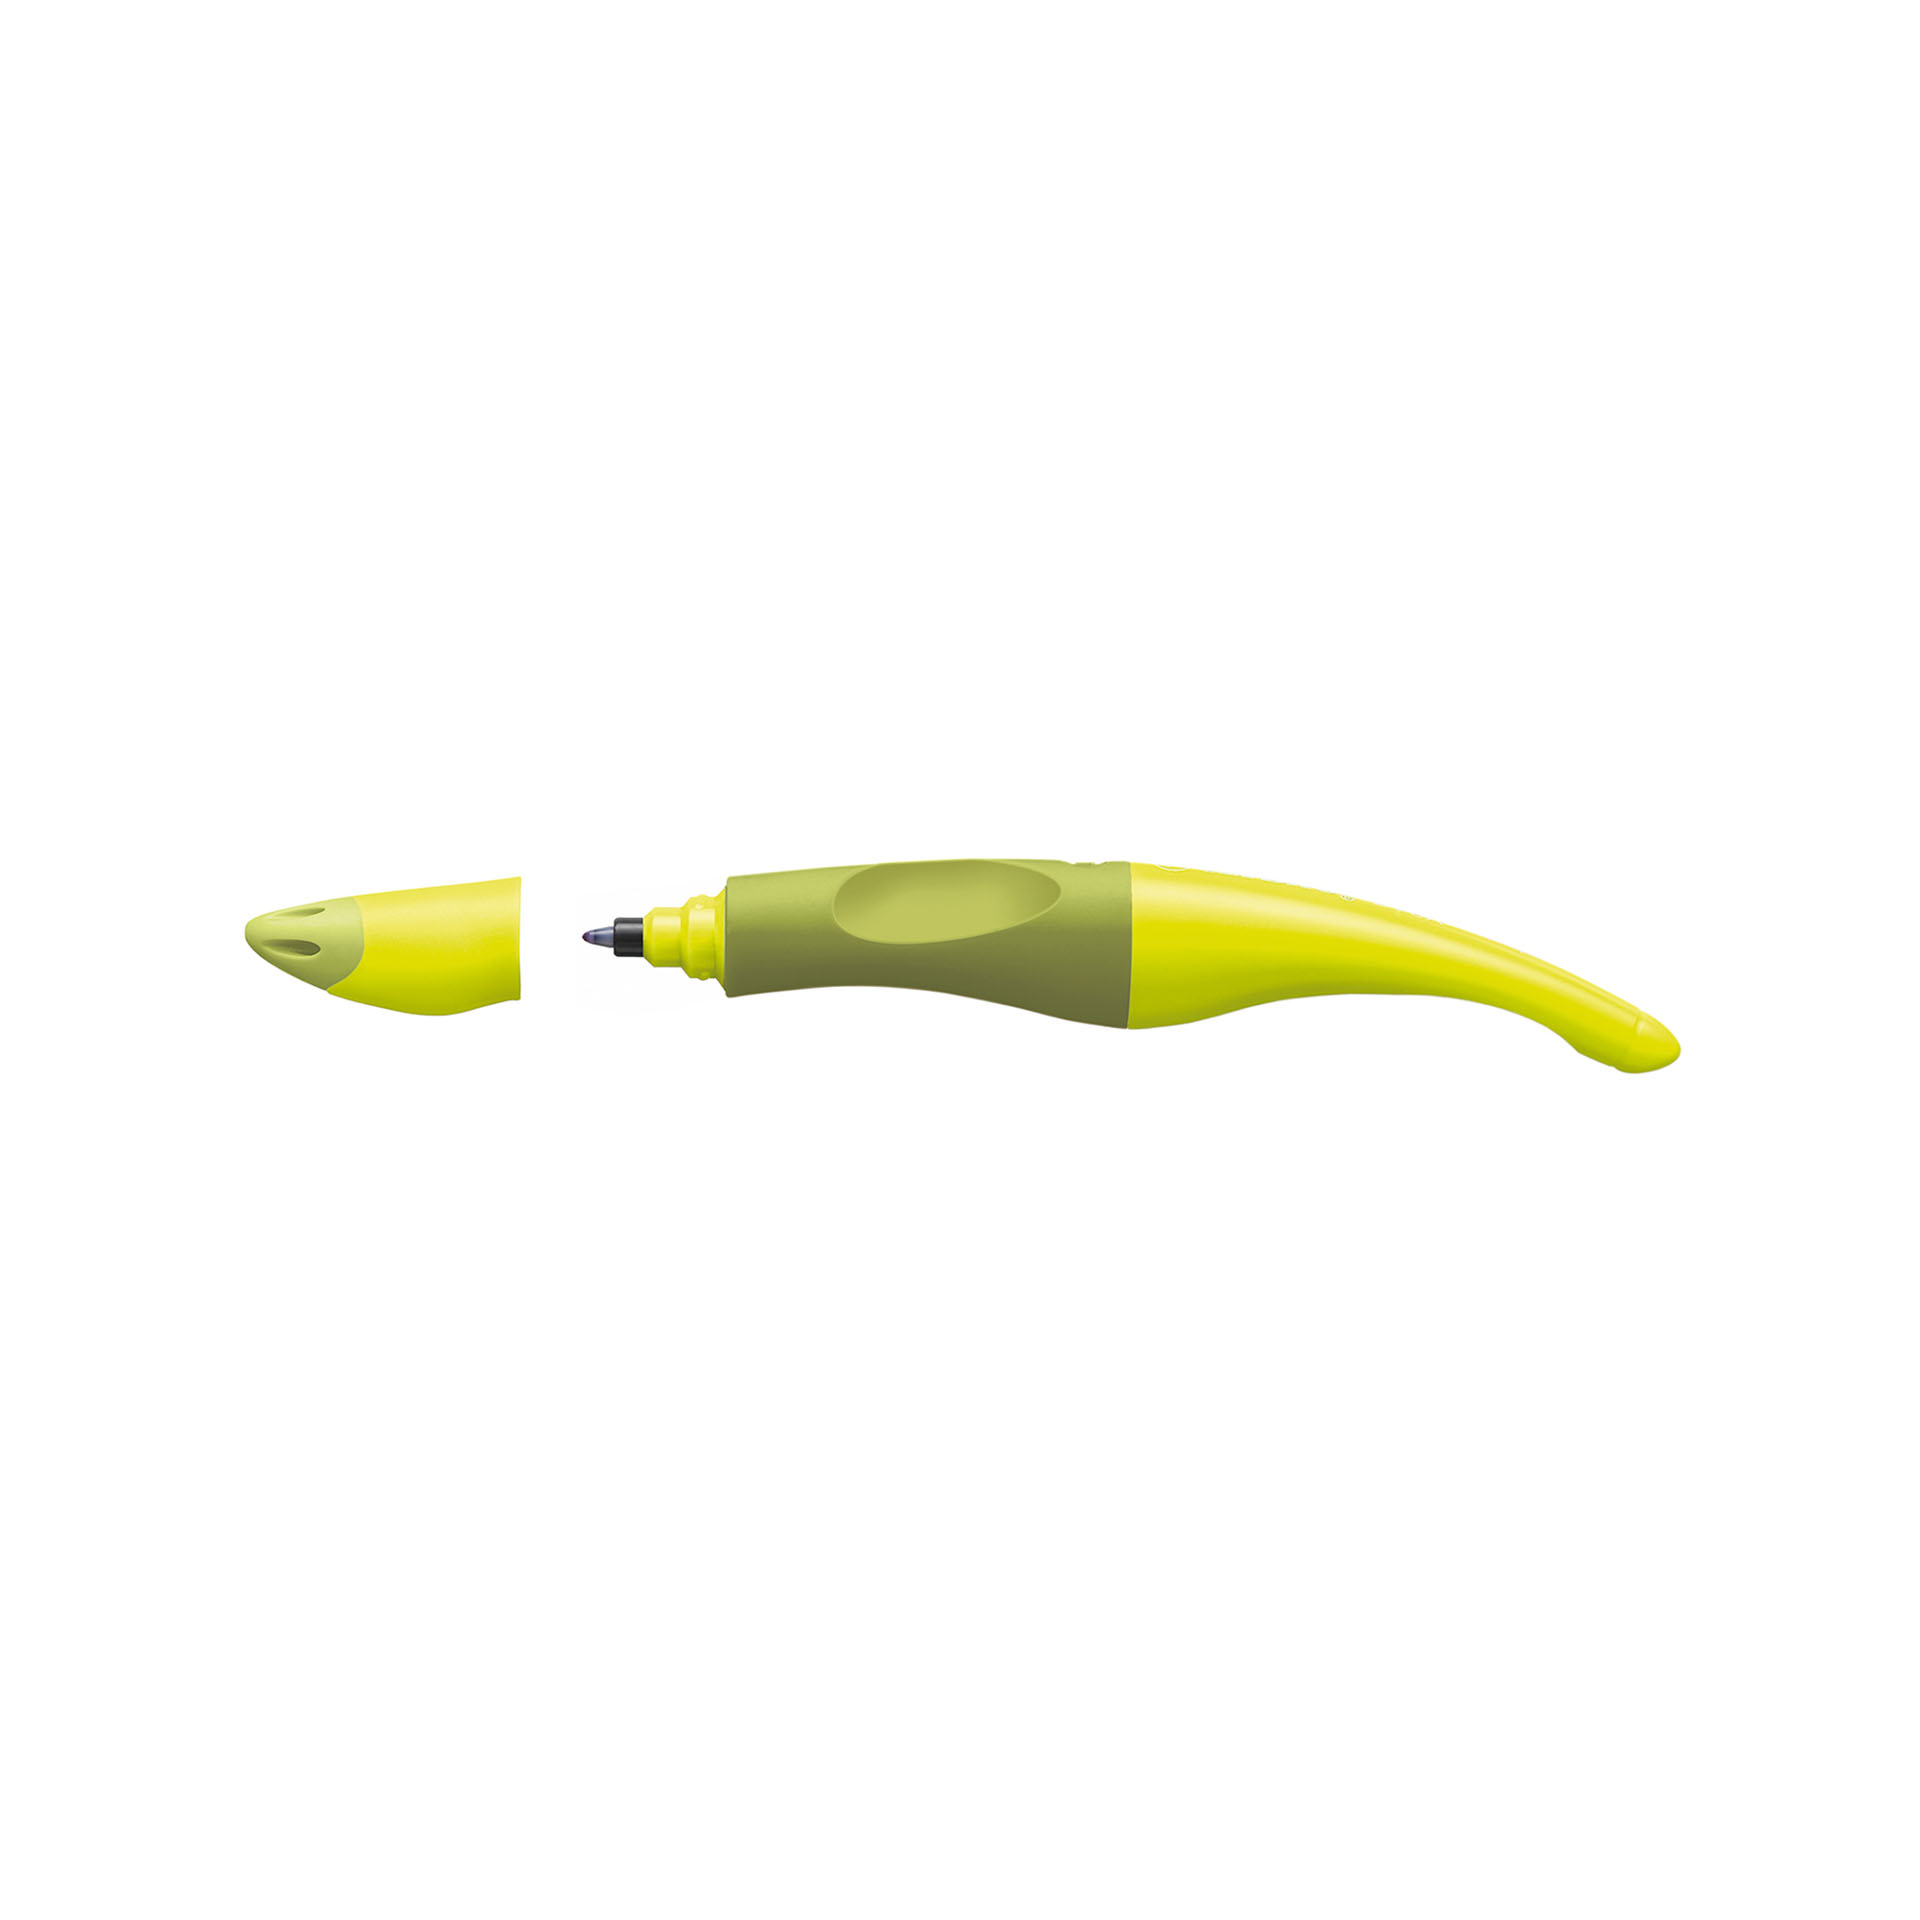 Penna Roller Ergonomica - Stabilo Easyoriginal Per Mancini In Verde/lime - Cartuccia Blu Inclusa, , large